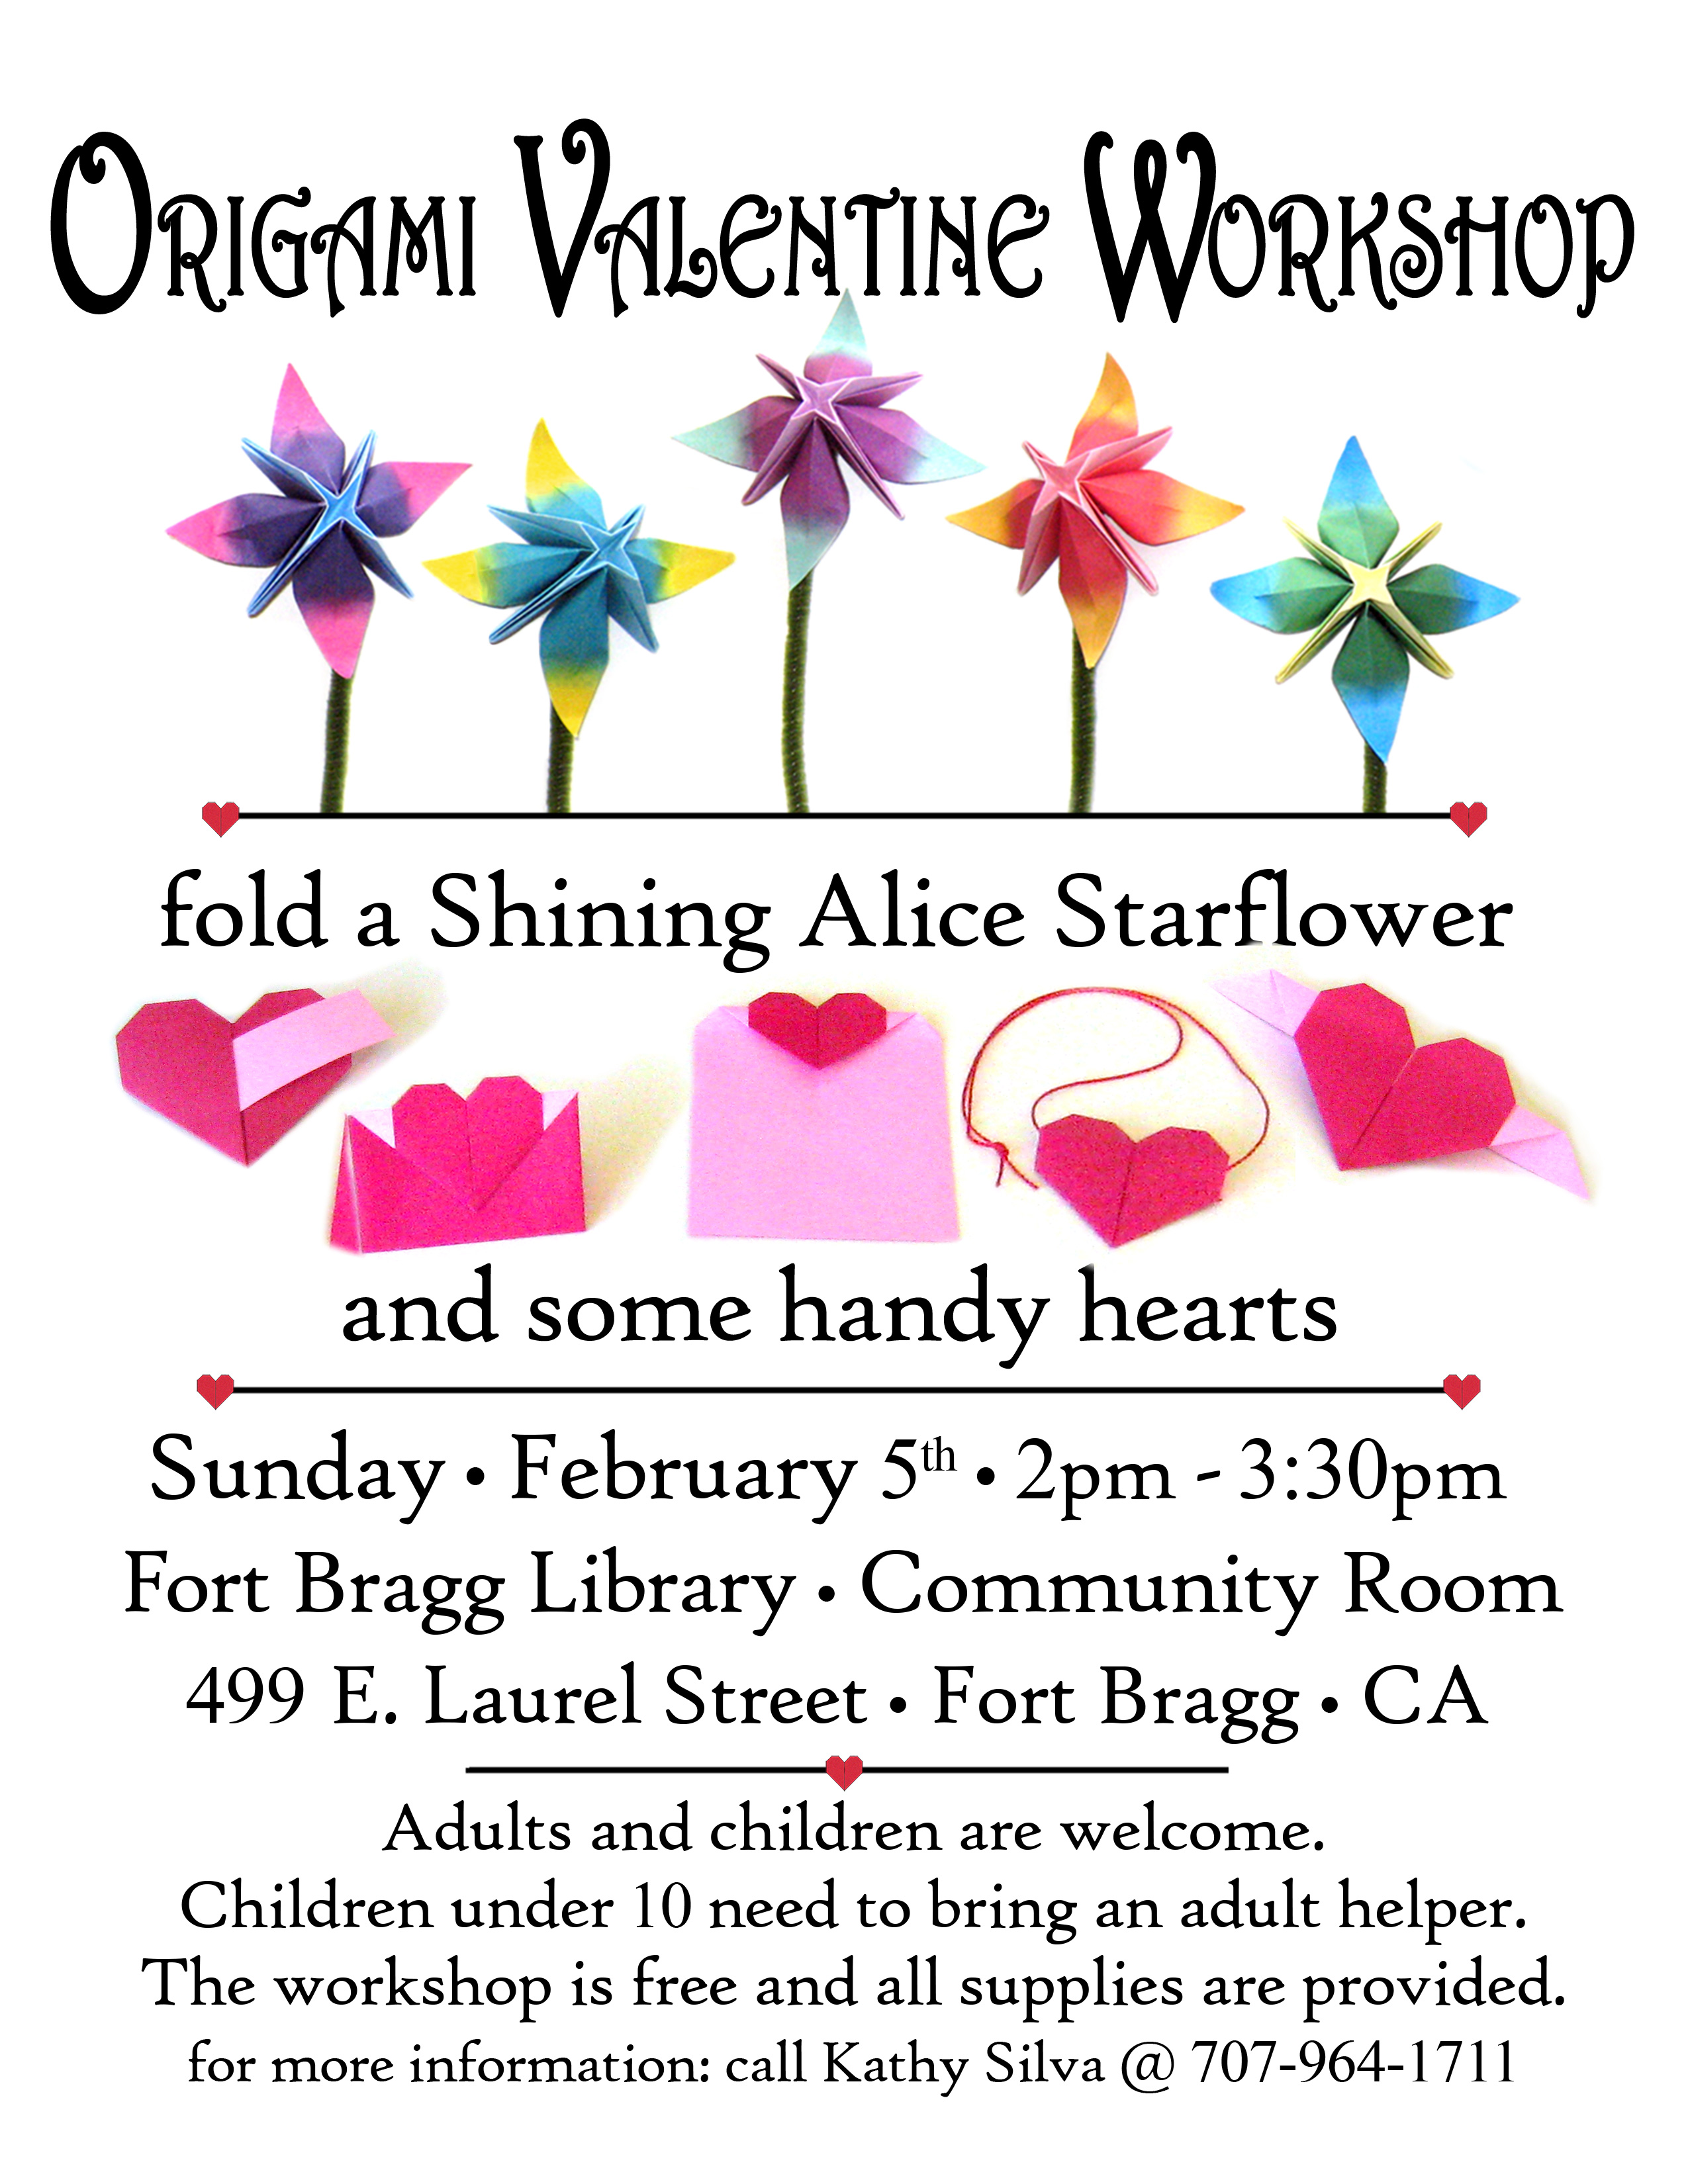 Origami Valentine Workshop with Kathy Silva